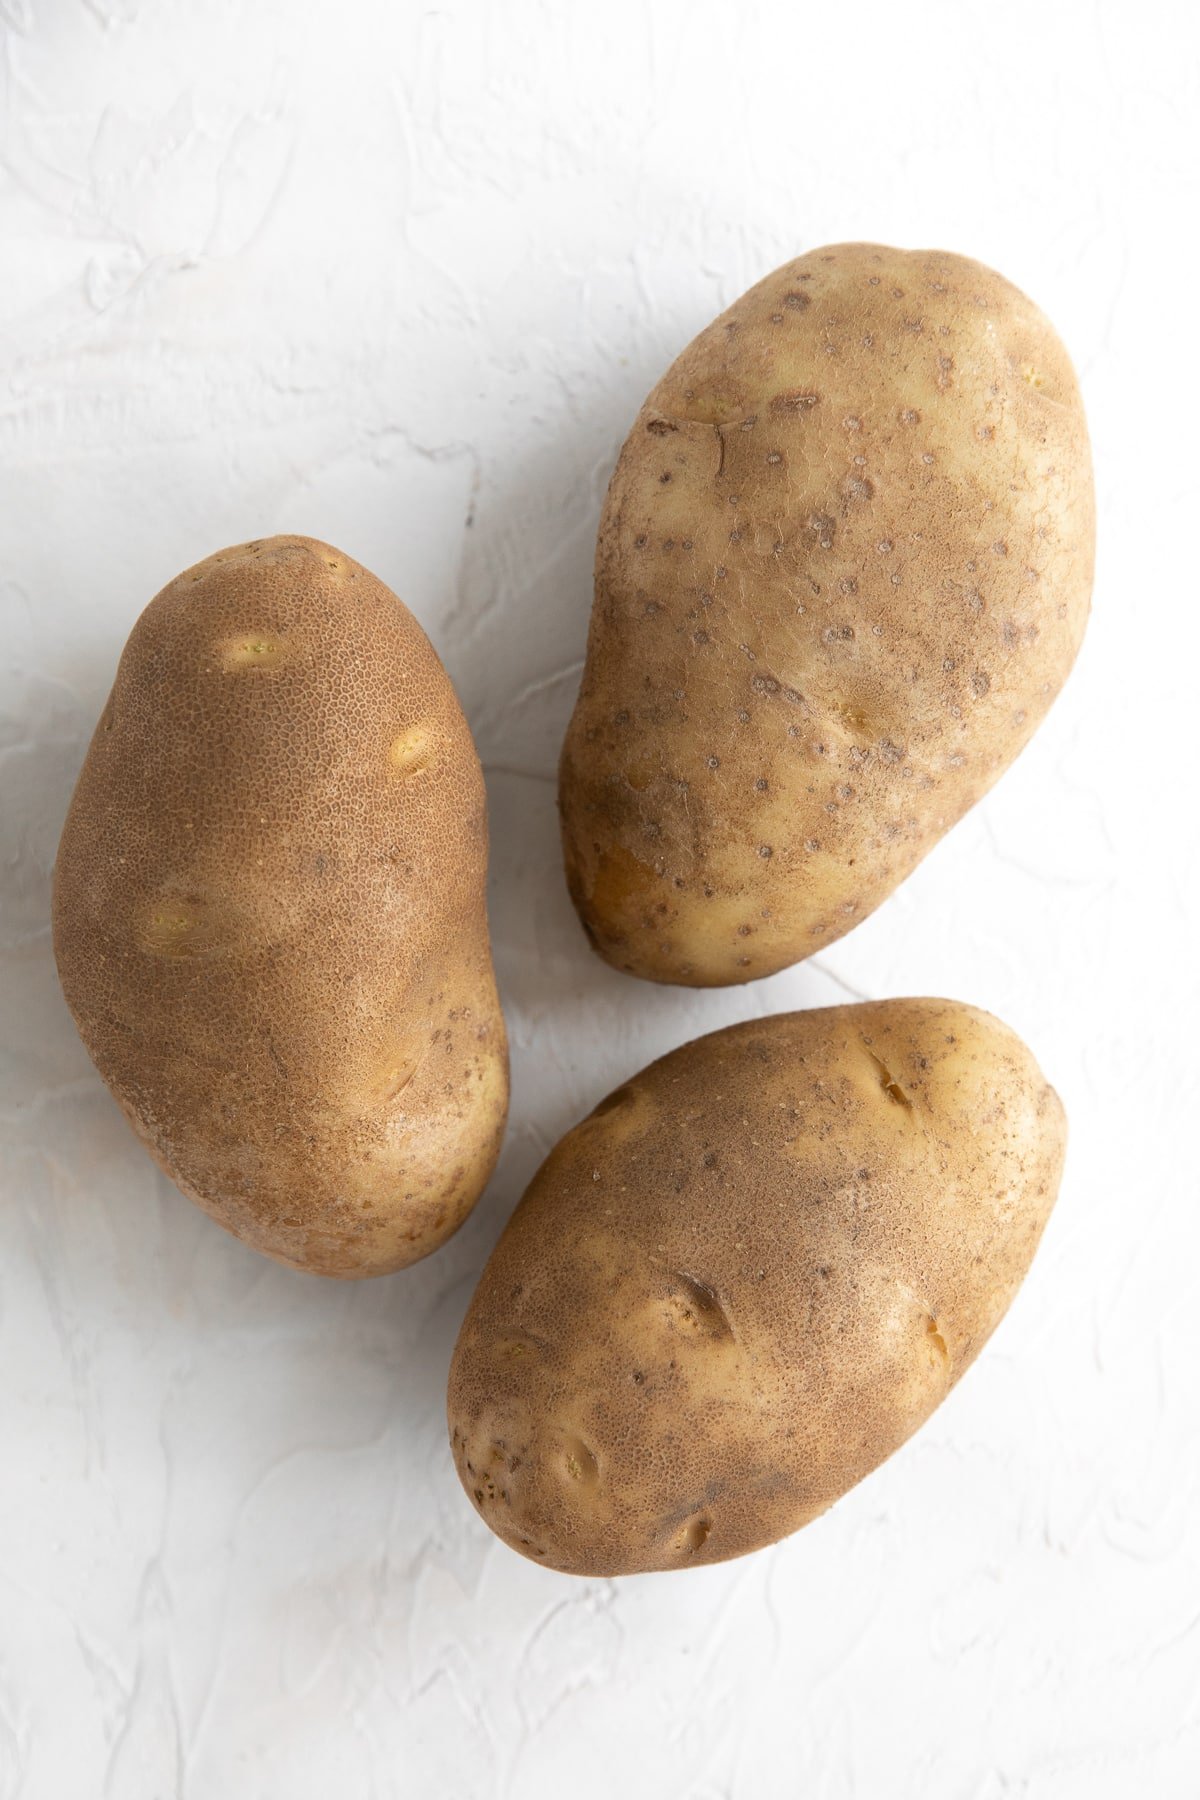 Three large russet potatoes